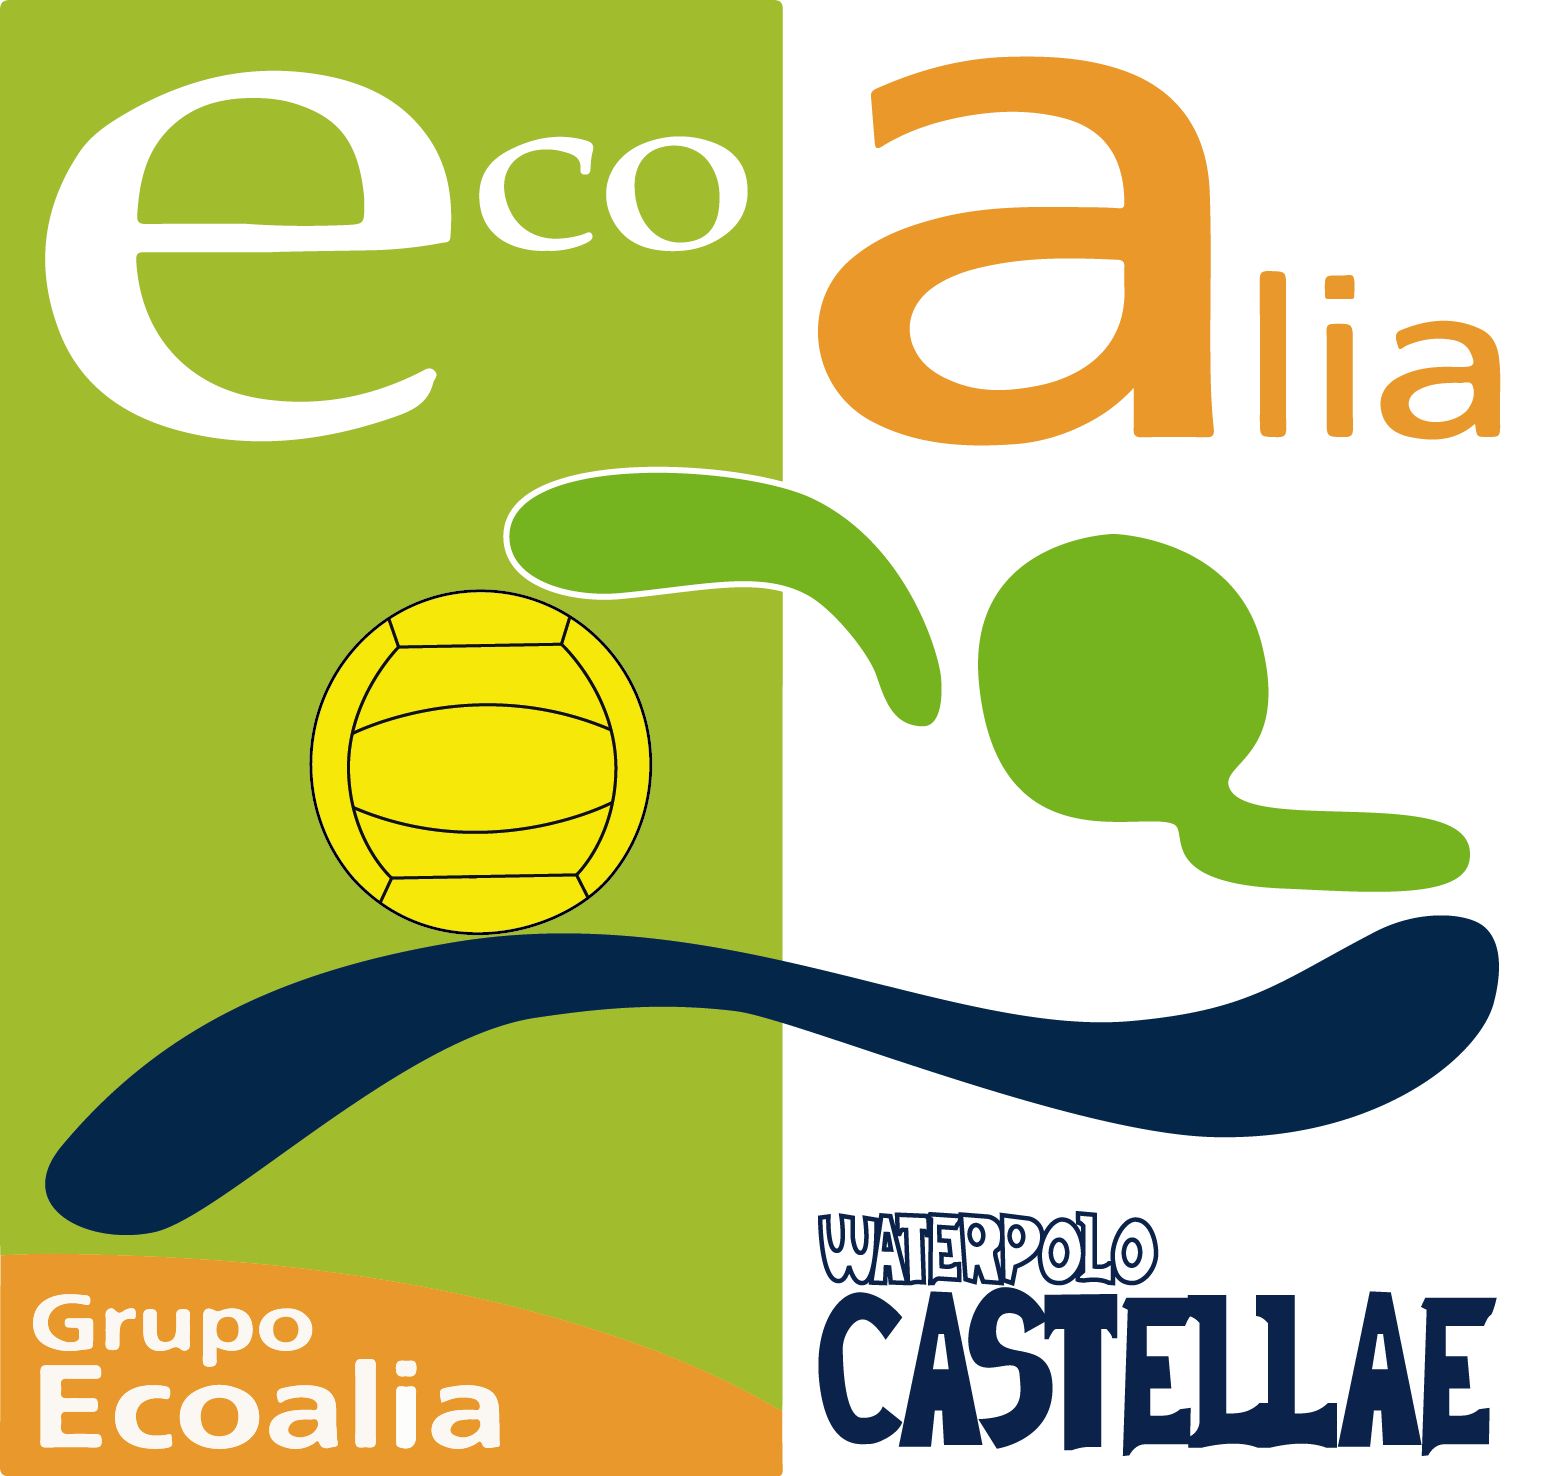 Ecoalia-Castellae